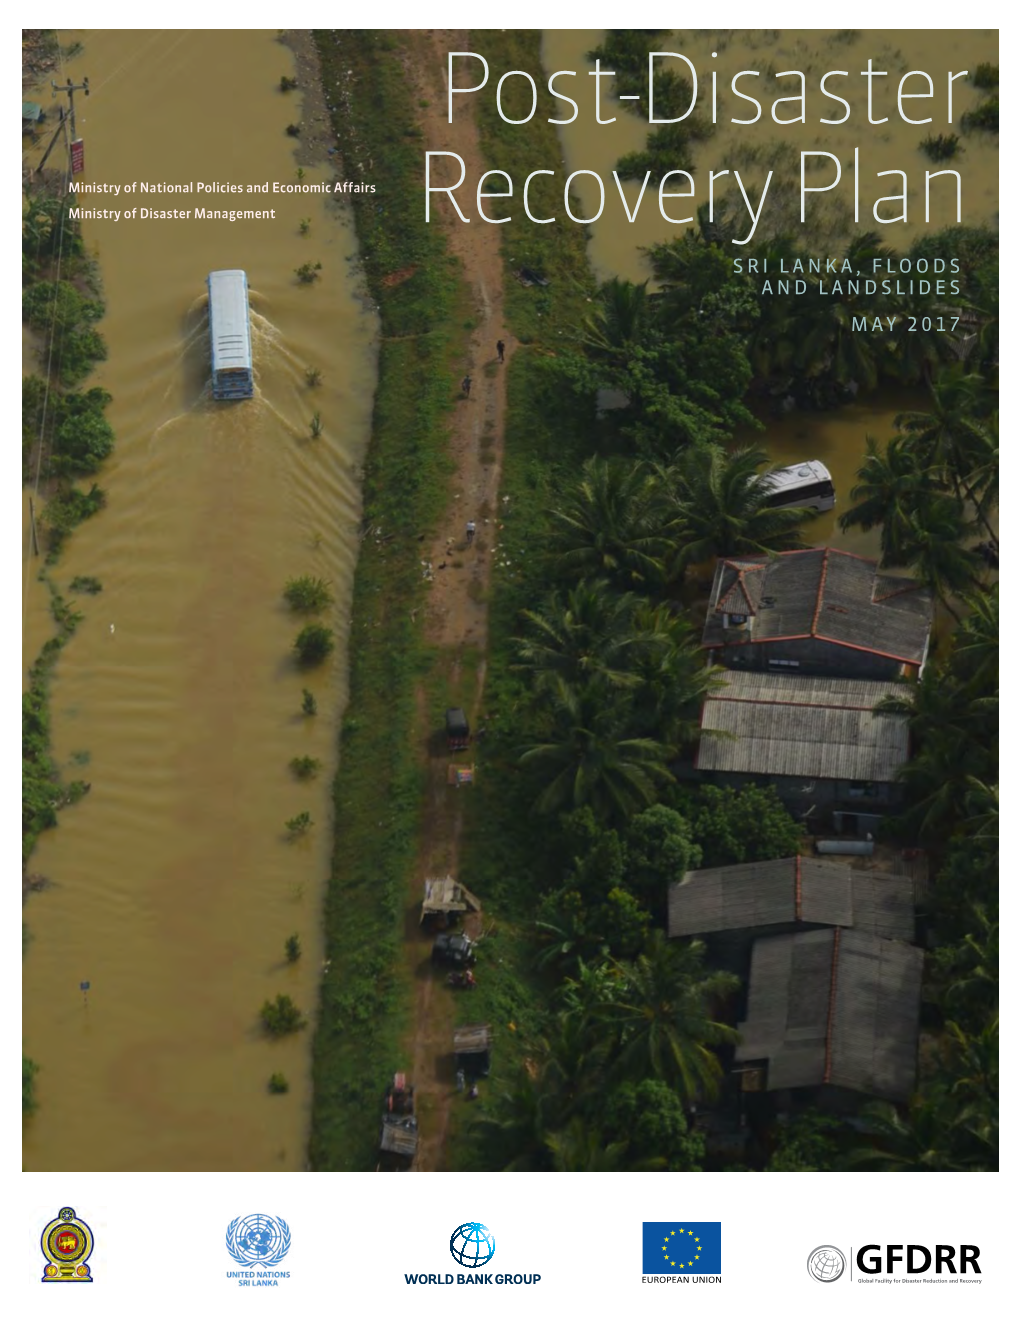 Post-Disaster Recovery Plan, Floods and Landslides, Sri Lanka